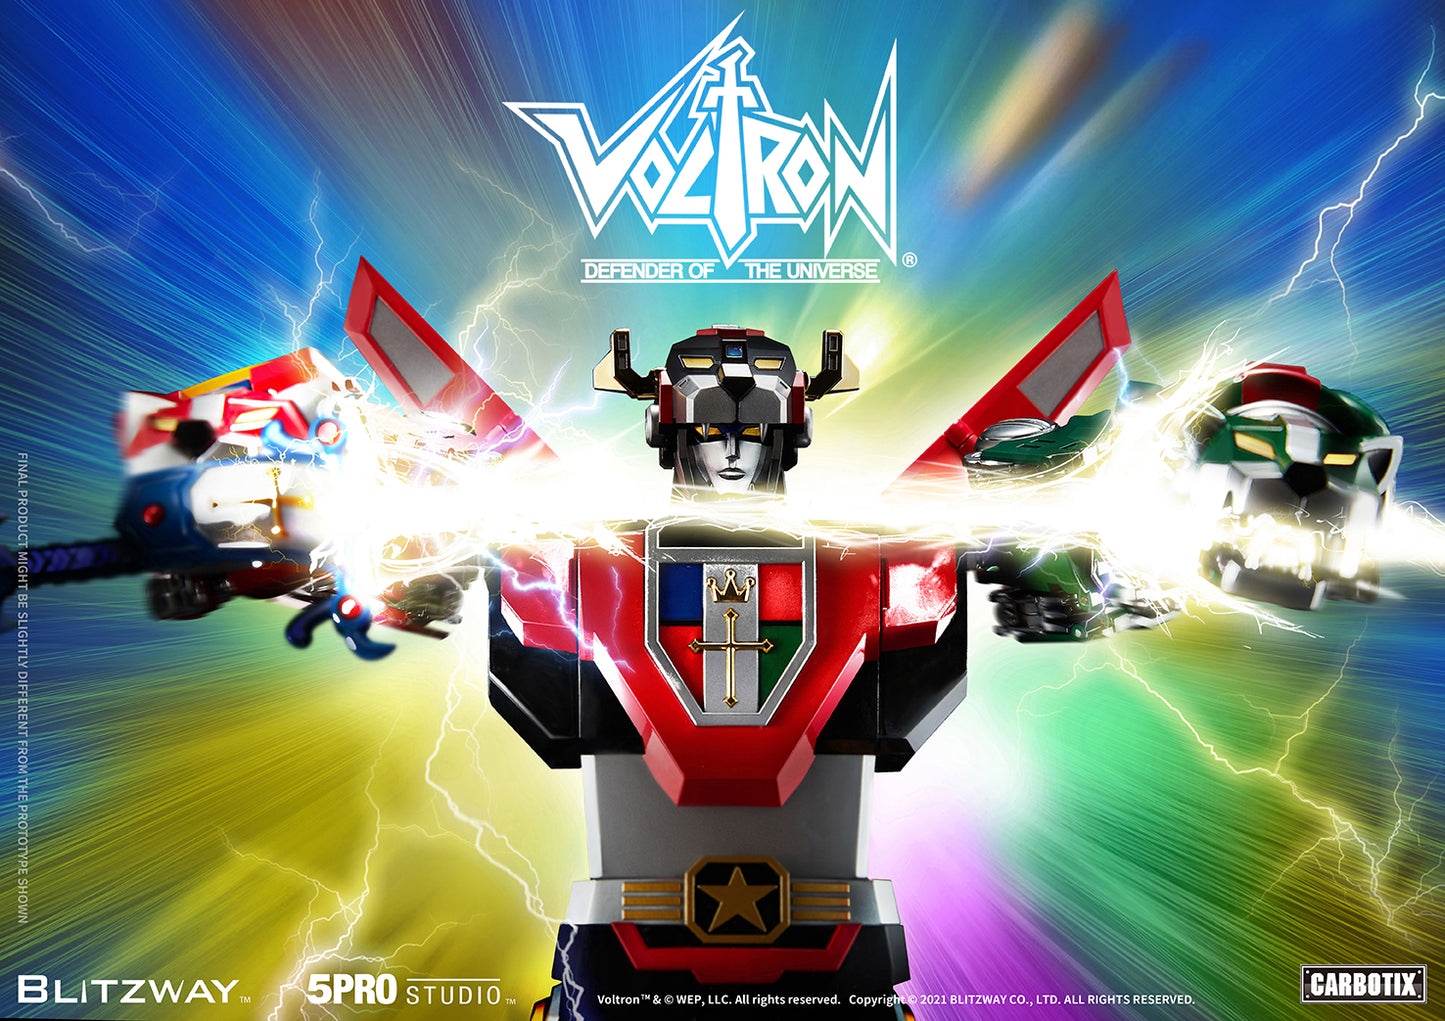 Voltron Defender of the Universe - Blitzway Carbotix